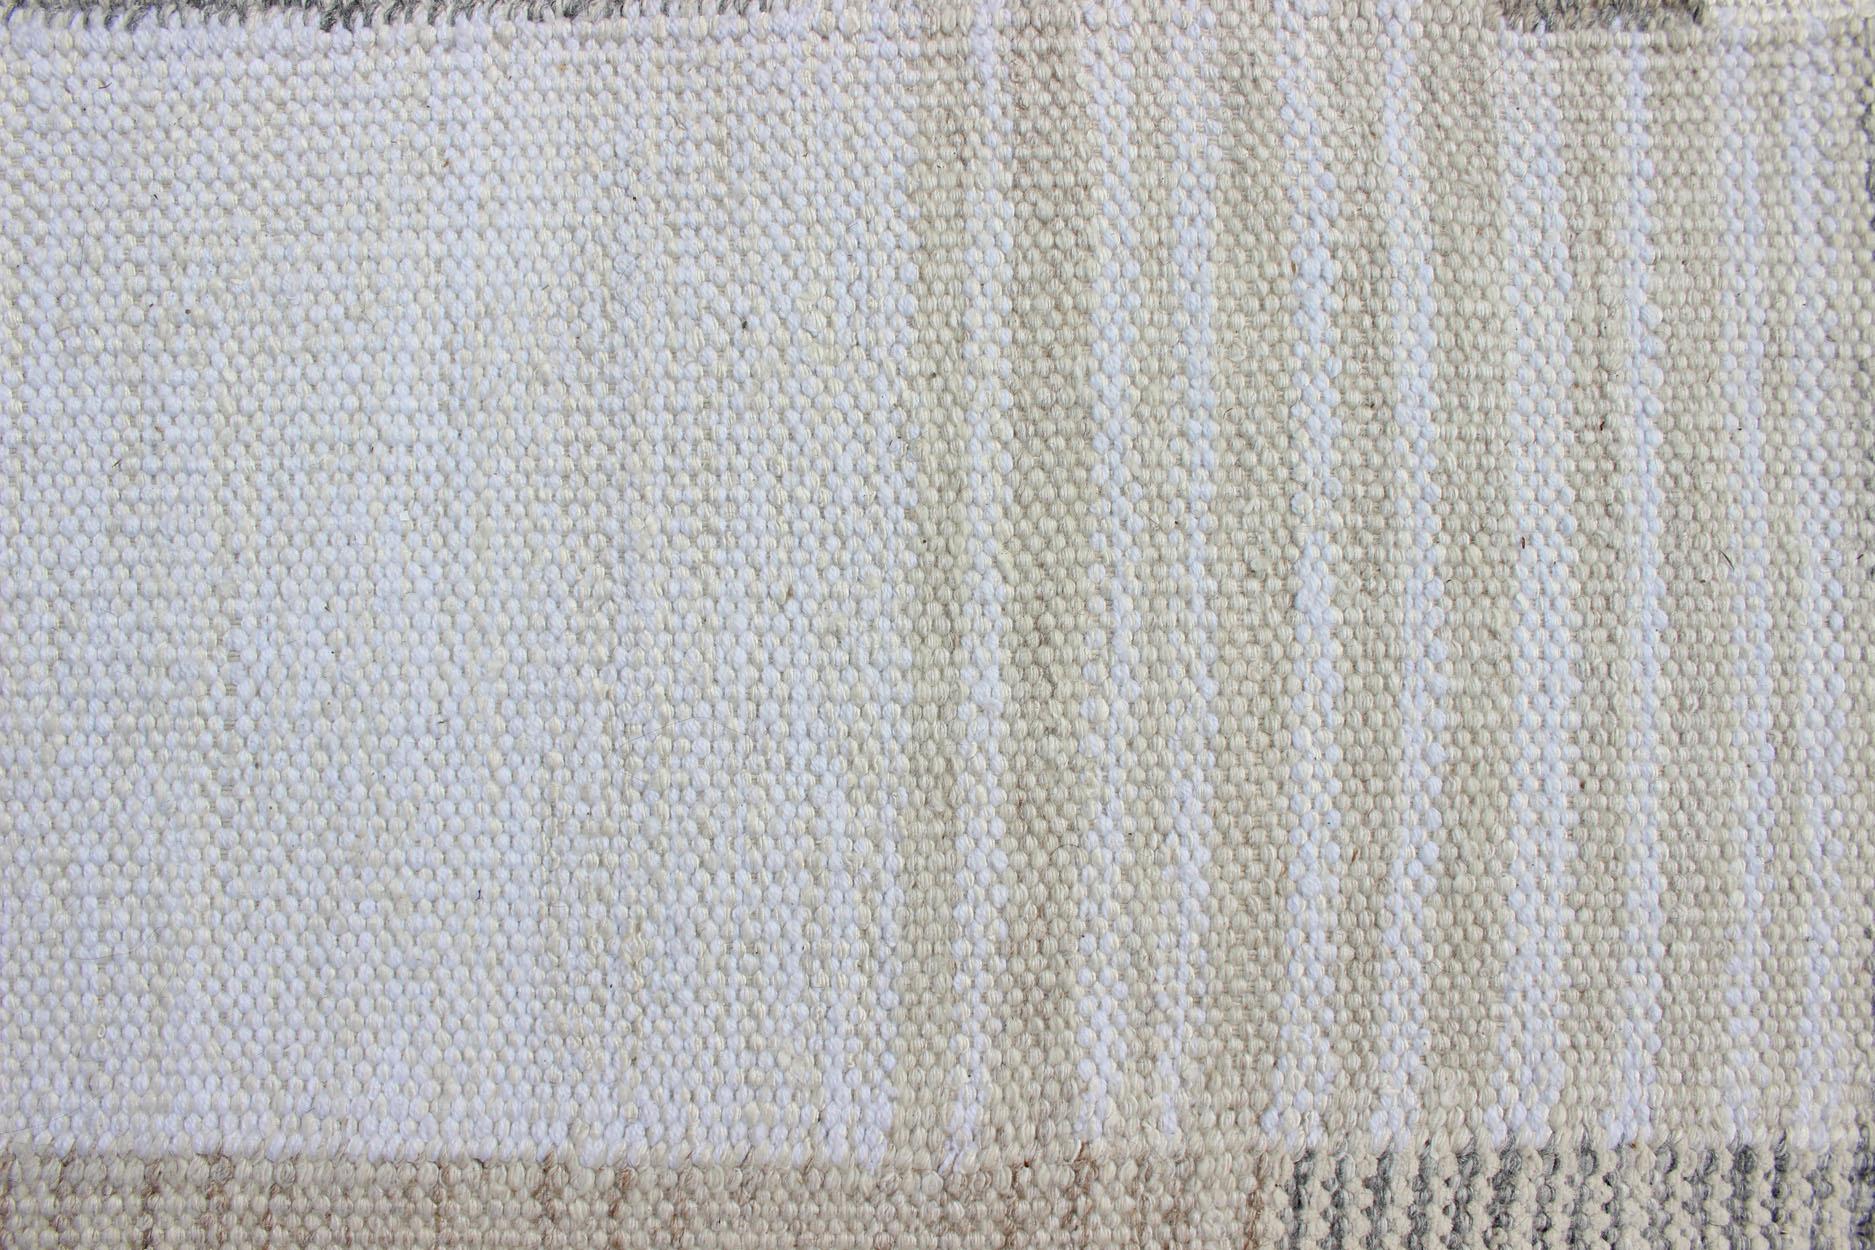 Indian Modern Scandinavian Flat-Weave Rug Design in Gray, beige, Creams & White Tones For Sale